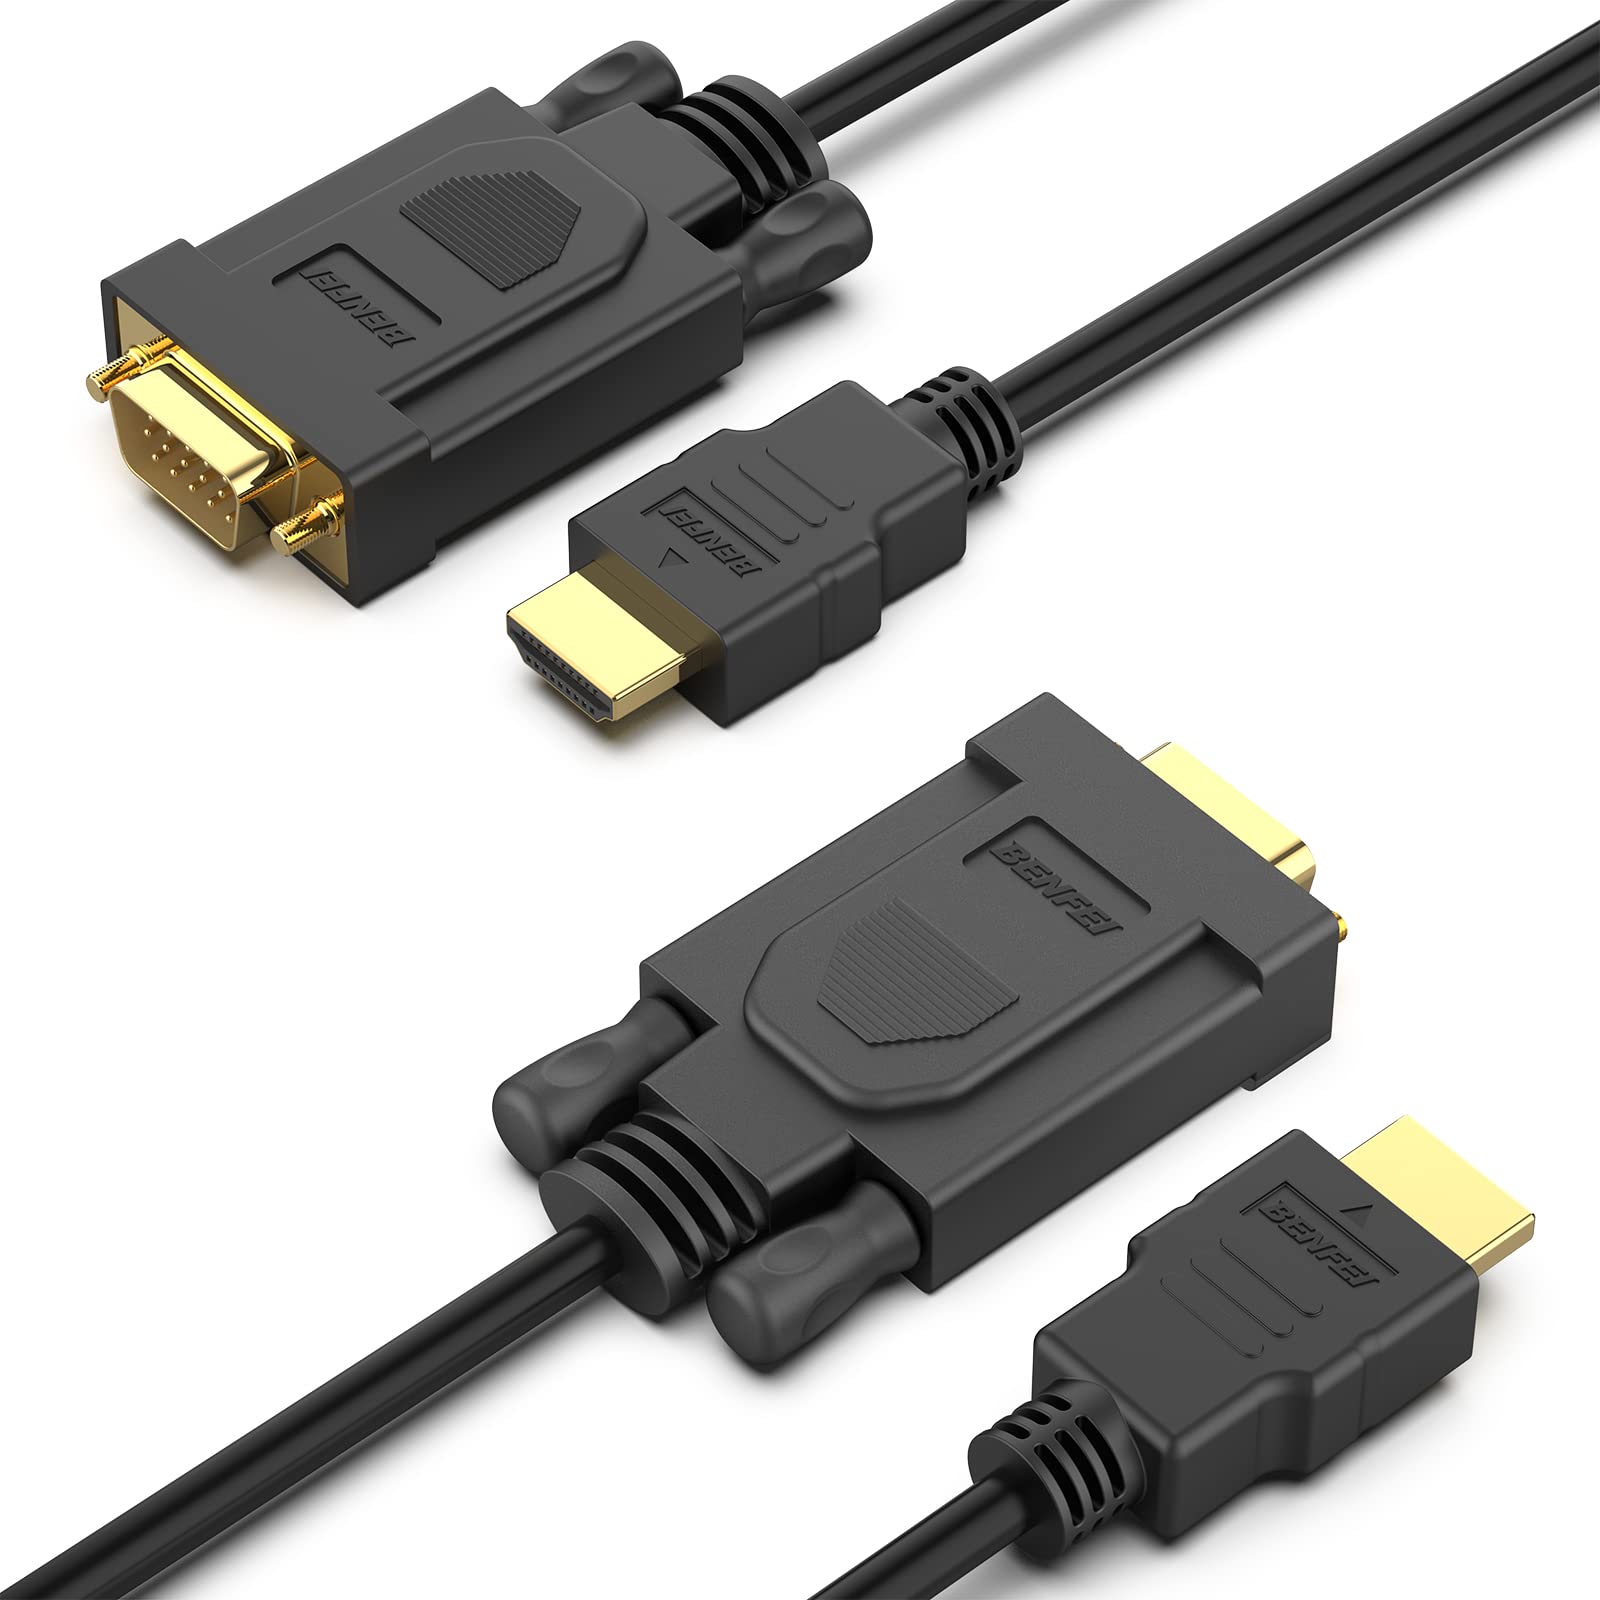 BENFEI 2個 1.8m HDMI-VGA ケーブル (逆方向に非対応) PC,モニター,プロジェクター, HDTV, Raspberry Pi, Roku, Xboxに対応